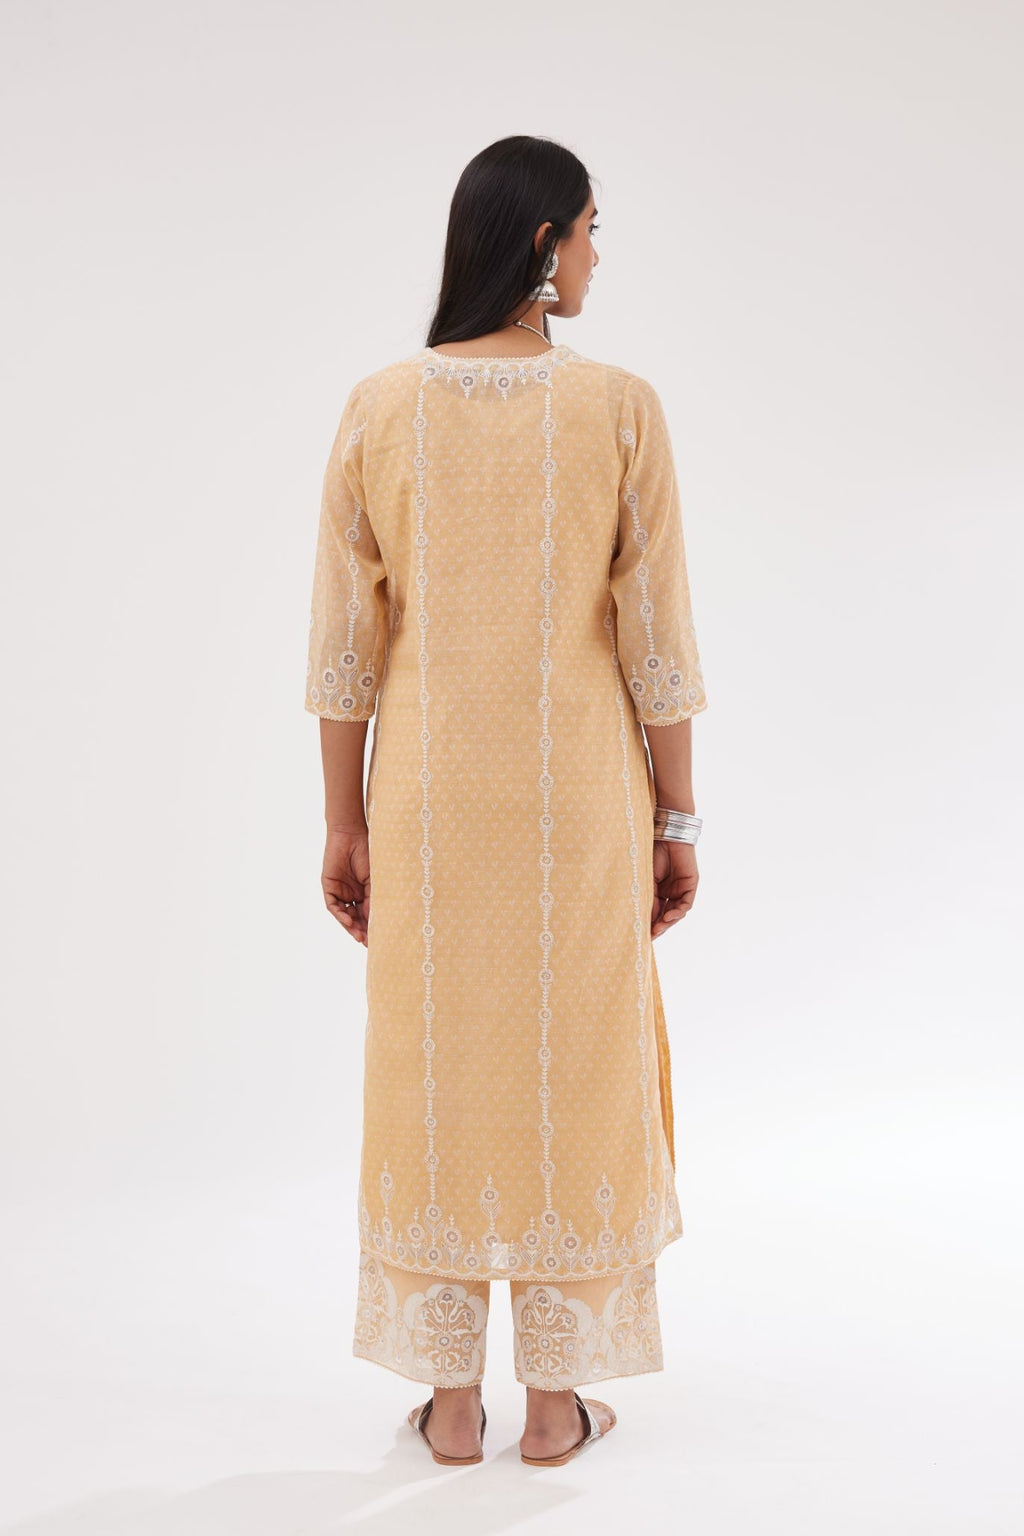 Peach cotton chanderi hand block printed kurta set with dori and silk thread chhari - stripes, all over and heavier butas at hem.